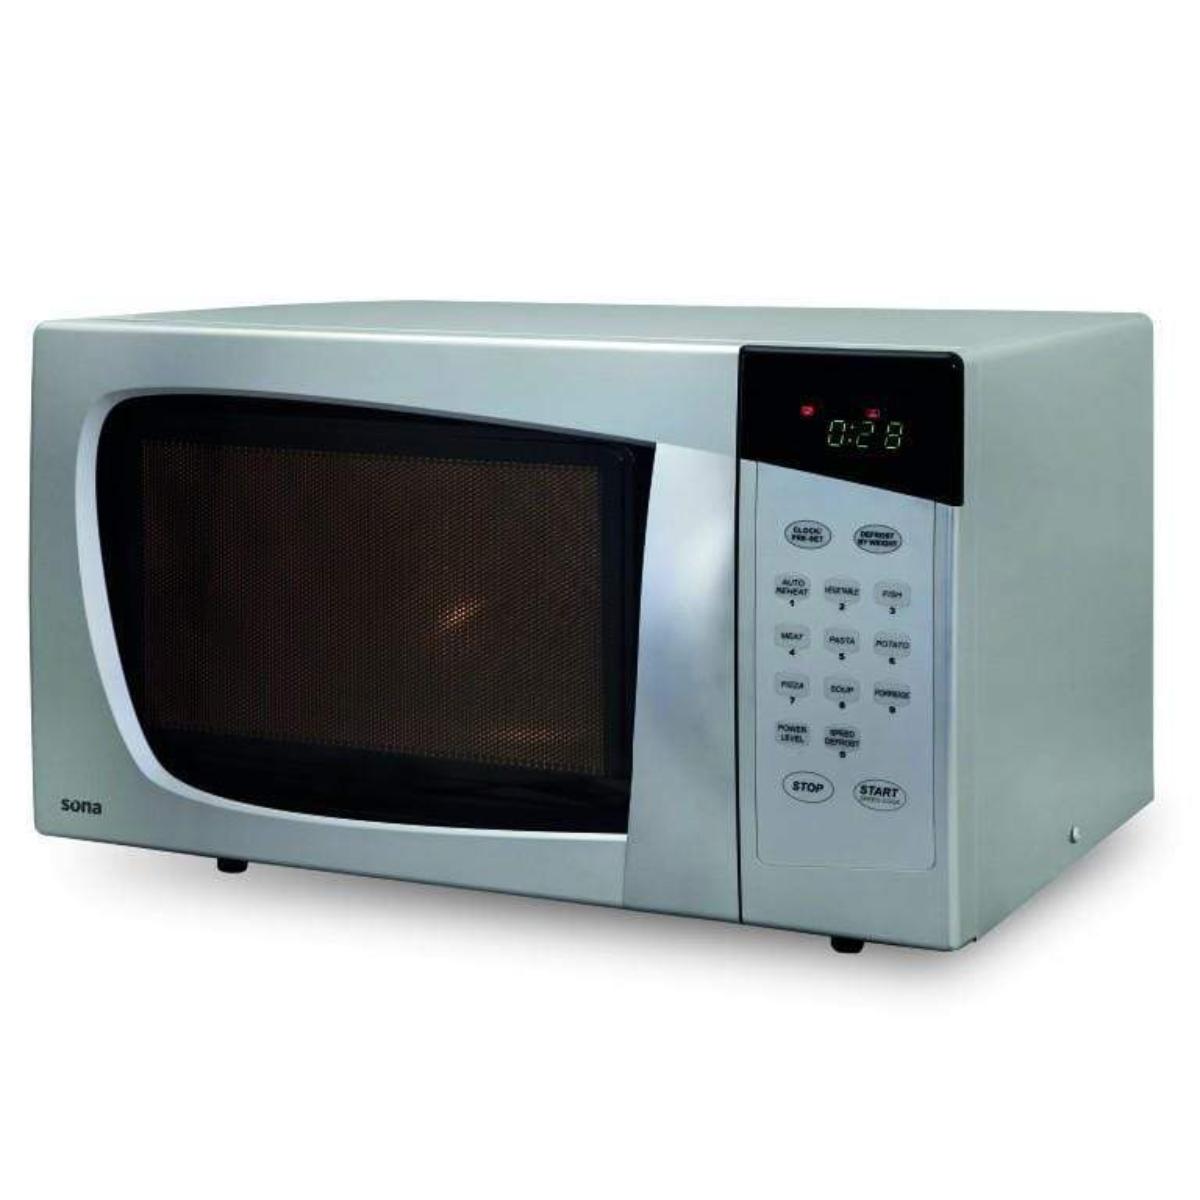 EM-25LSHN/SONA  Microwave Oven 25 L  Silver SILVER / 25 L